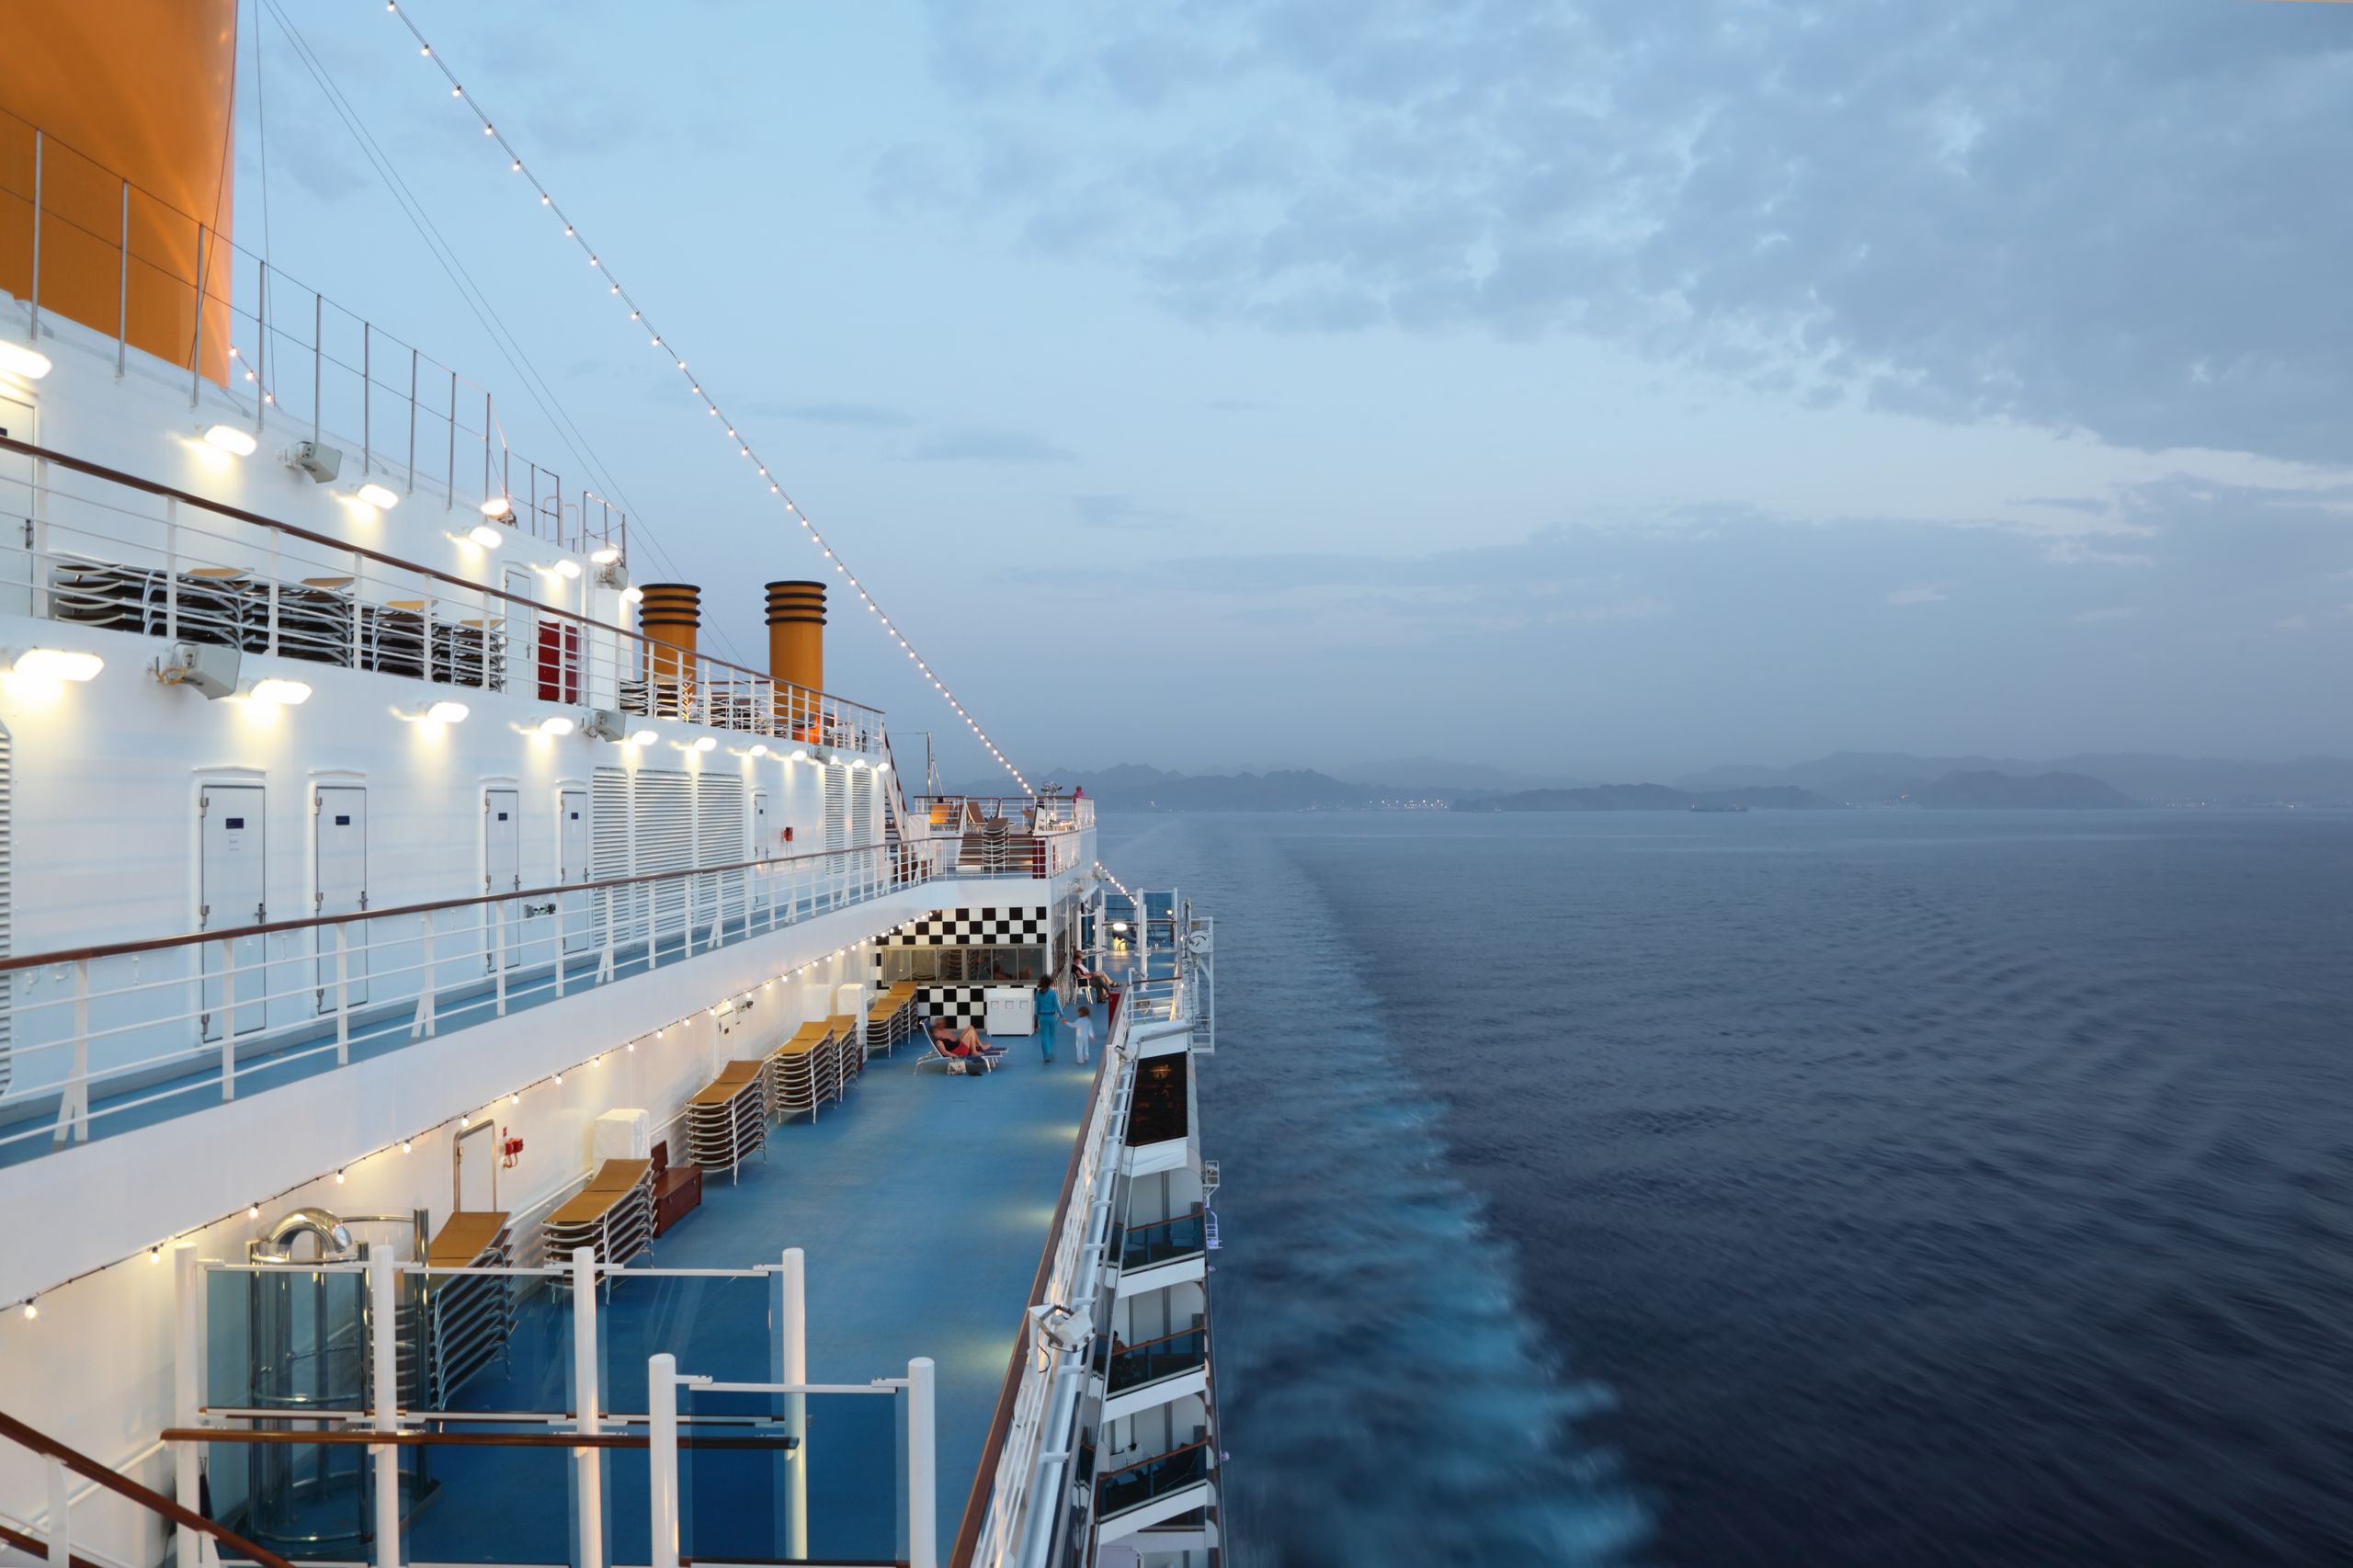 Cruise ship lighting